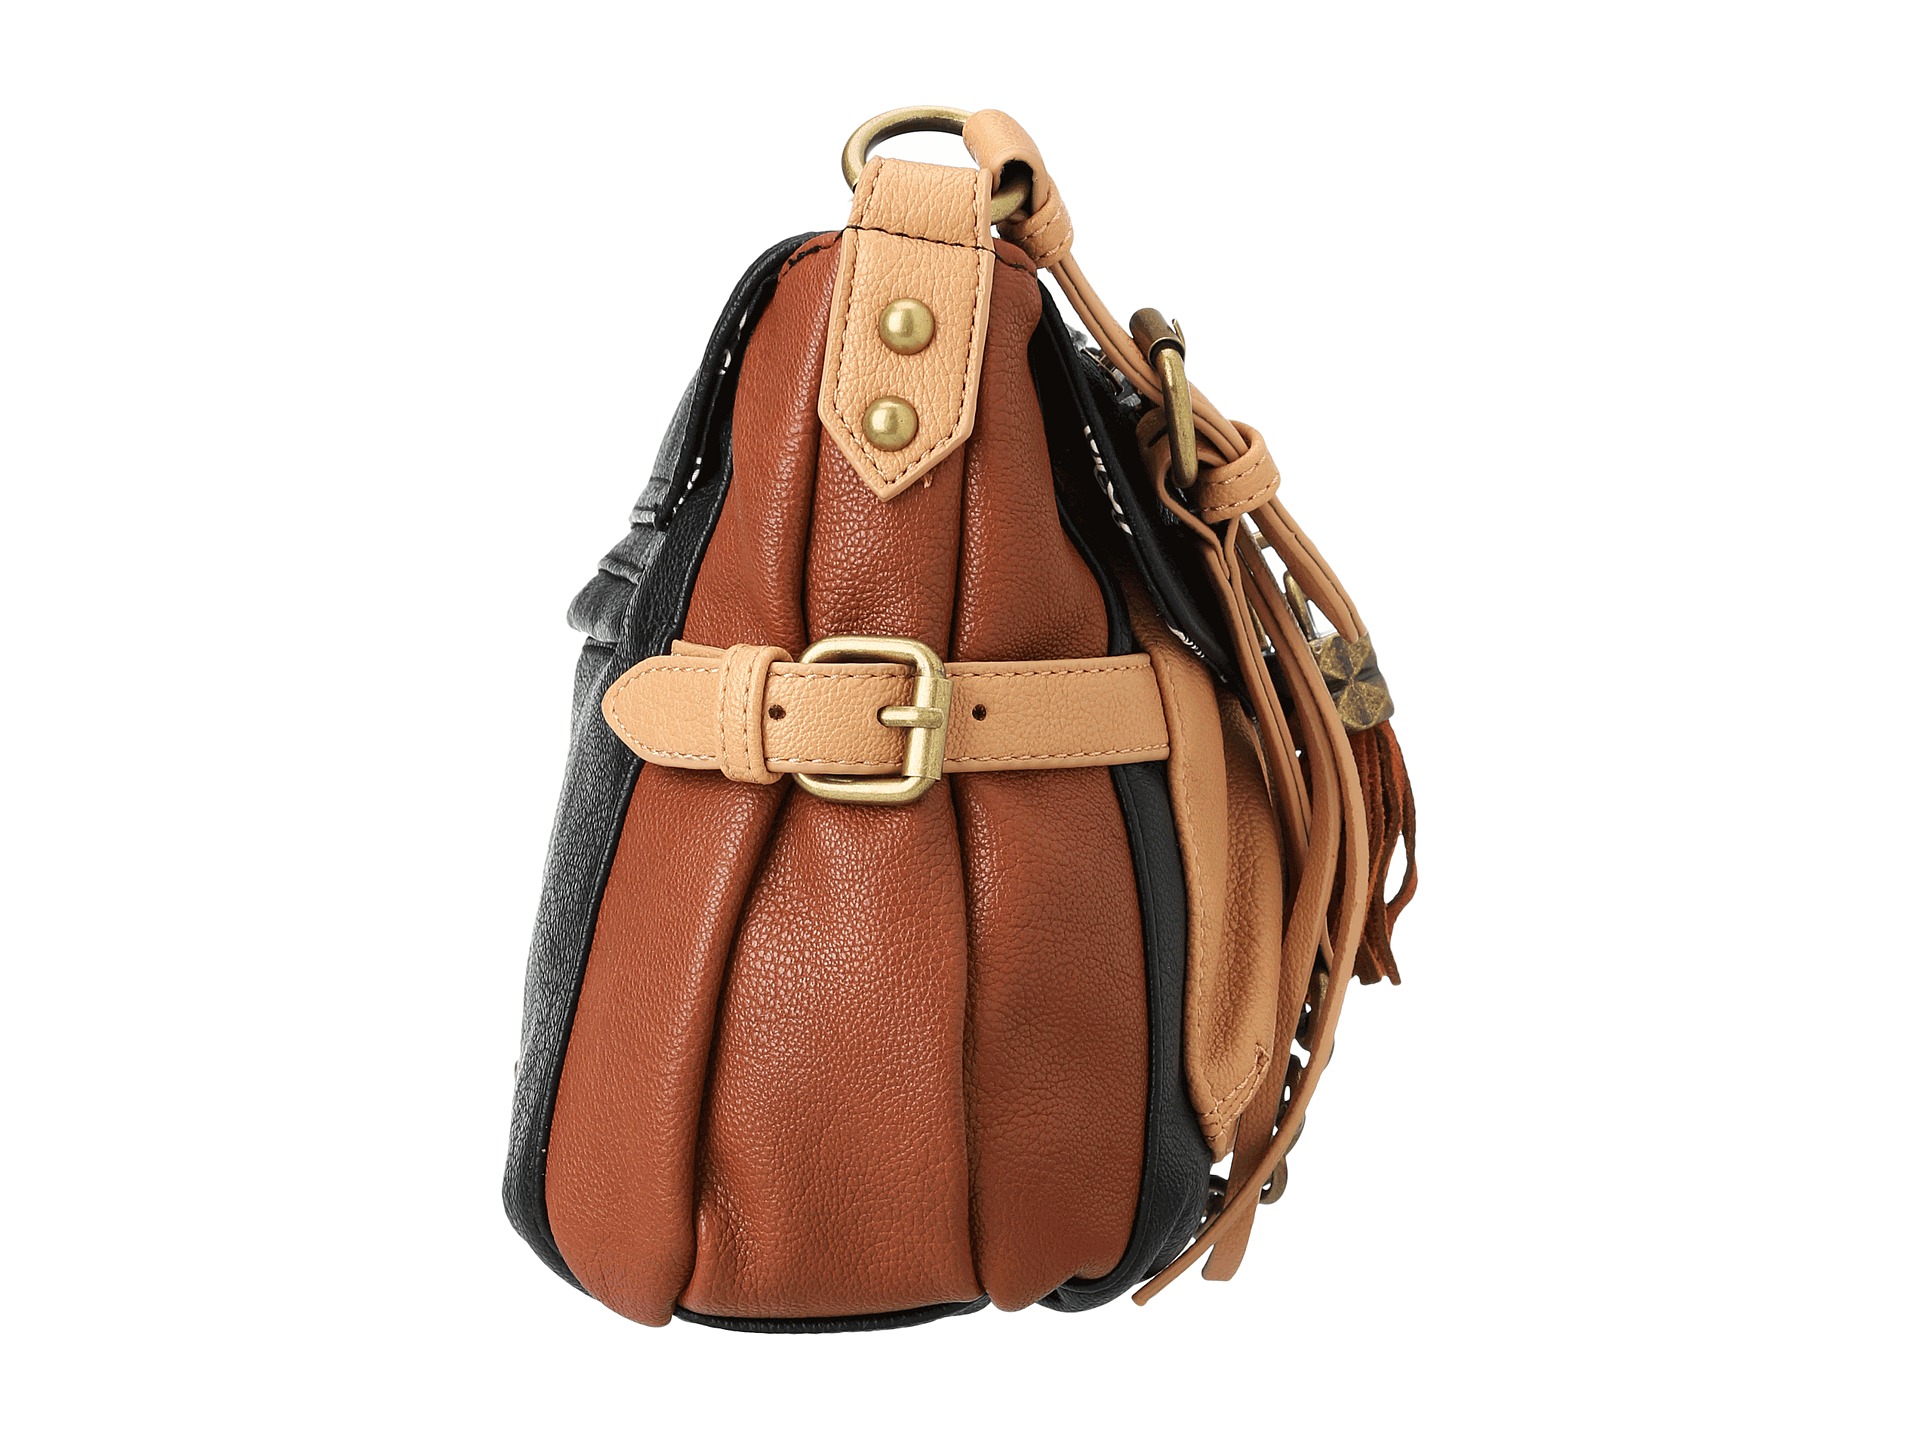 Jessica Simpson Handbags On Sale Images | TheCelebrityPix